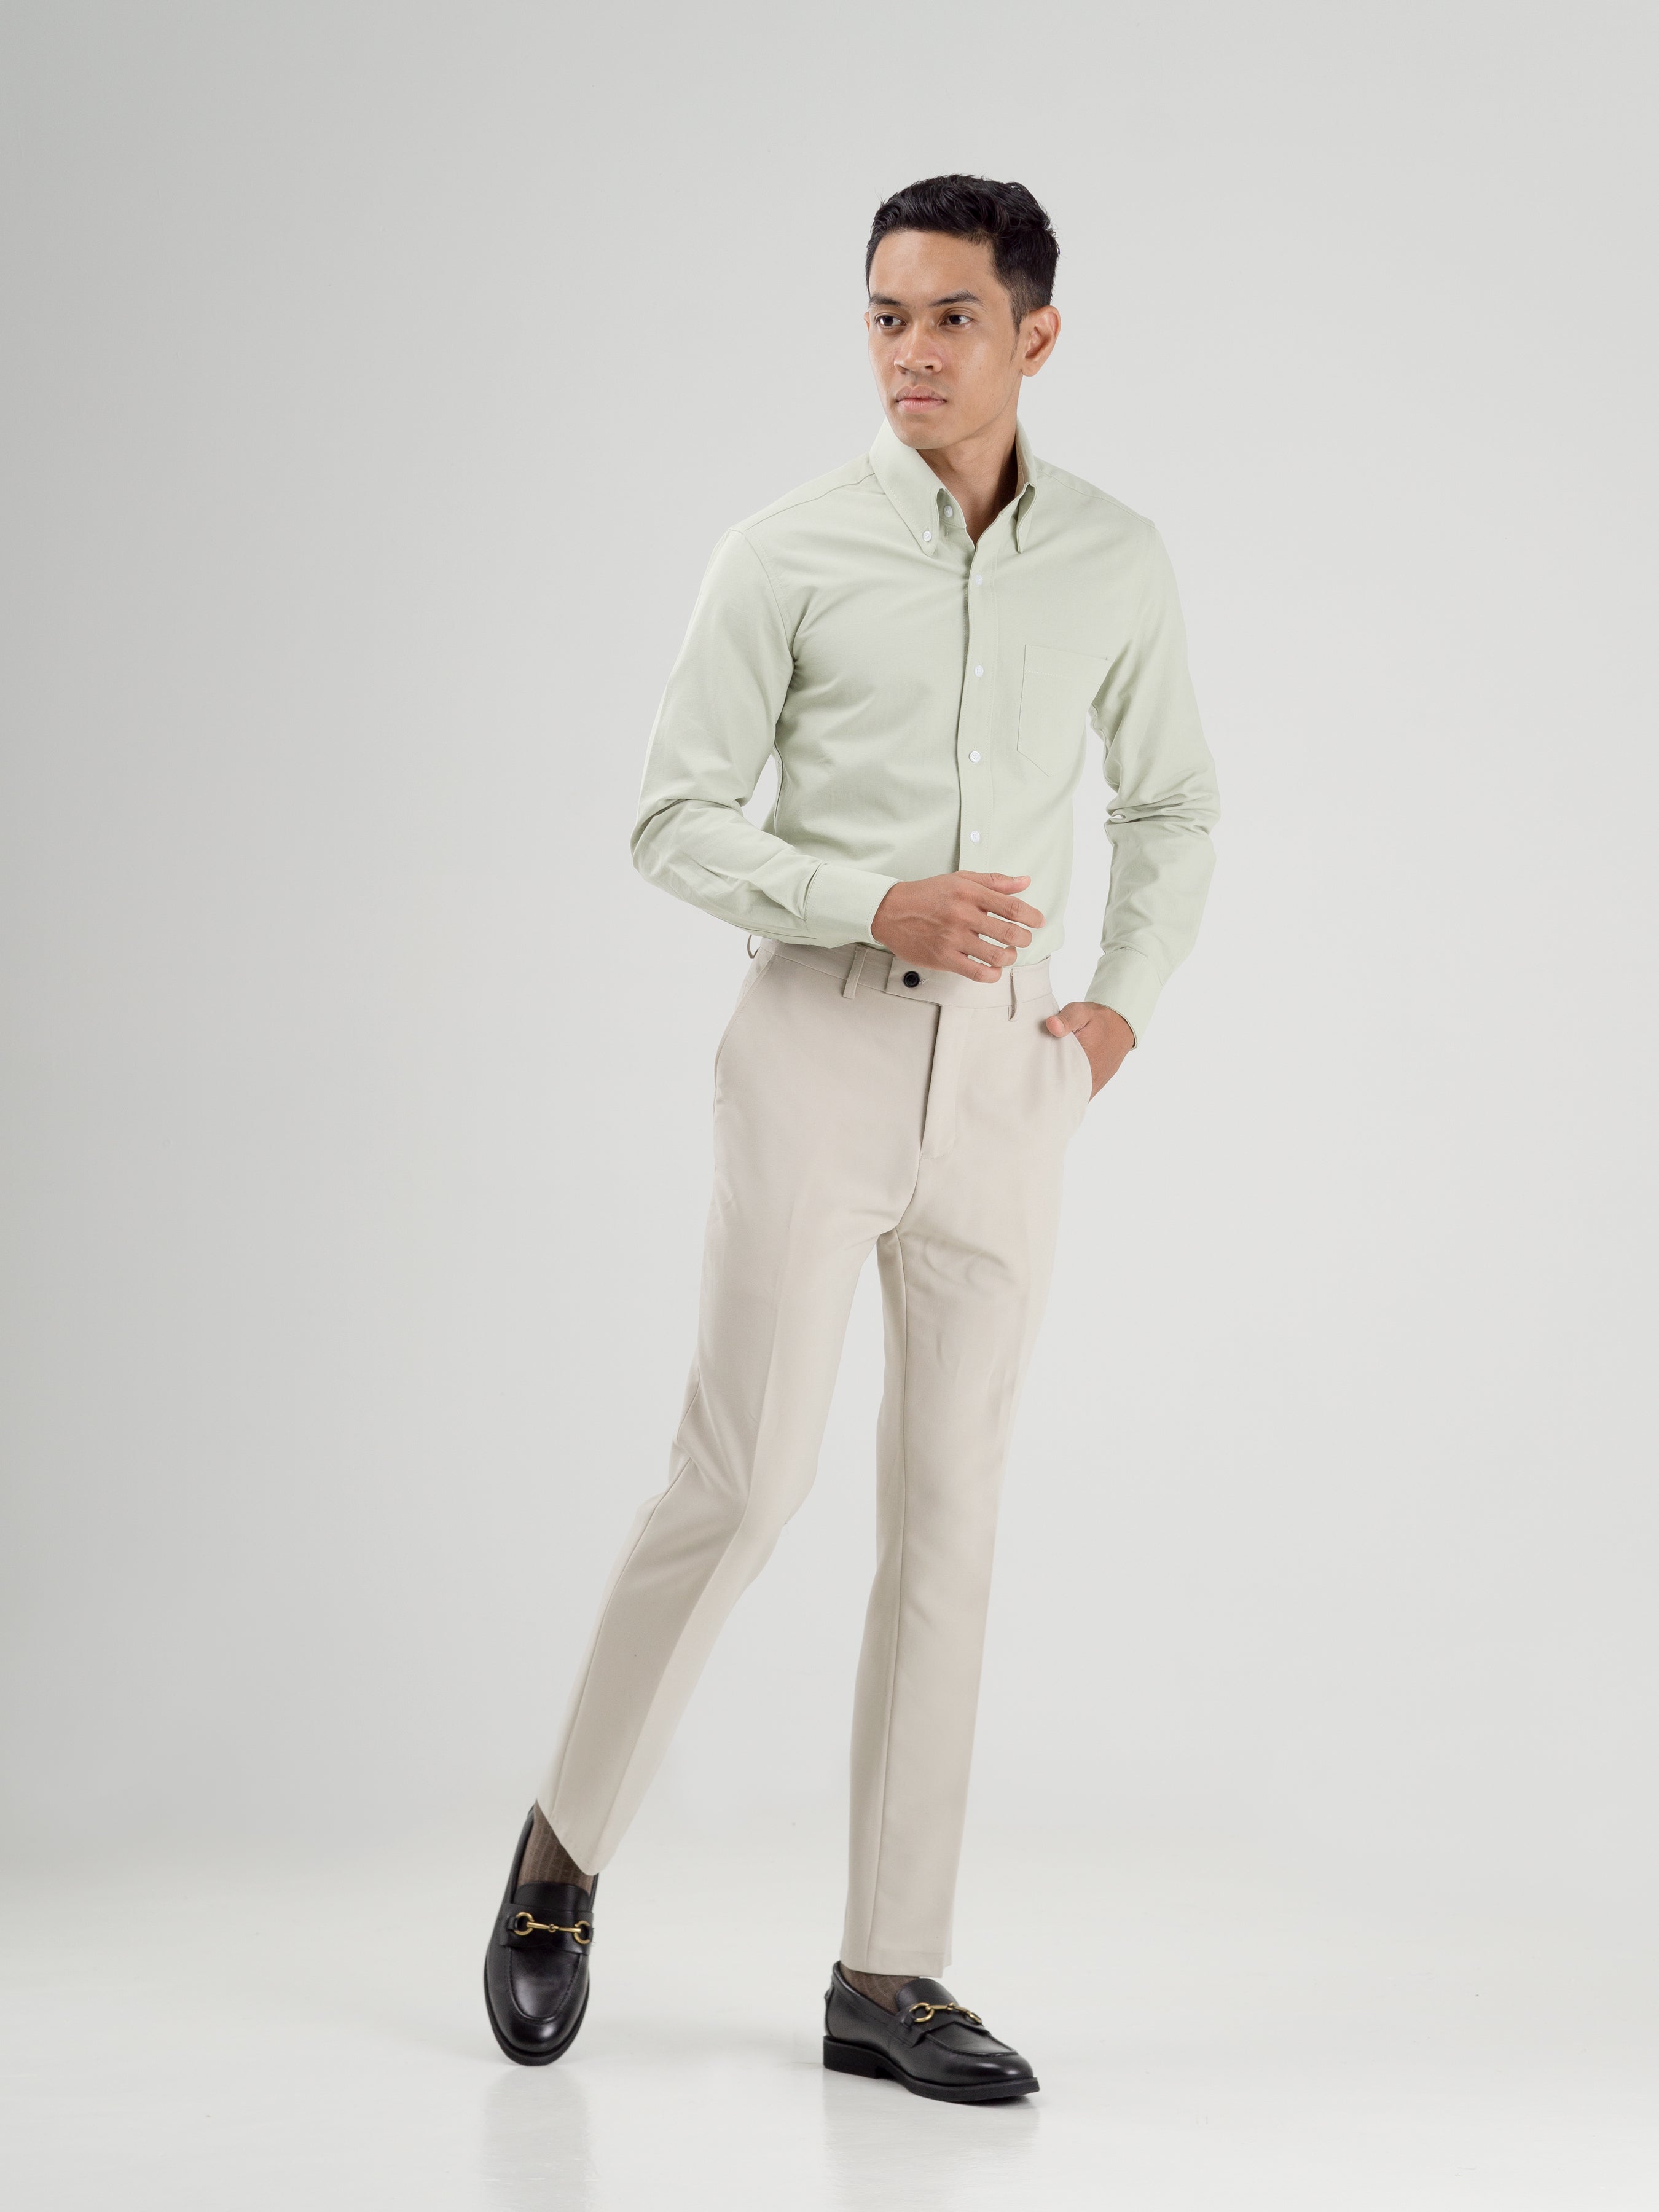 Formal Shirt - Mint Green Oxford Button-Down Collar